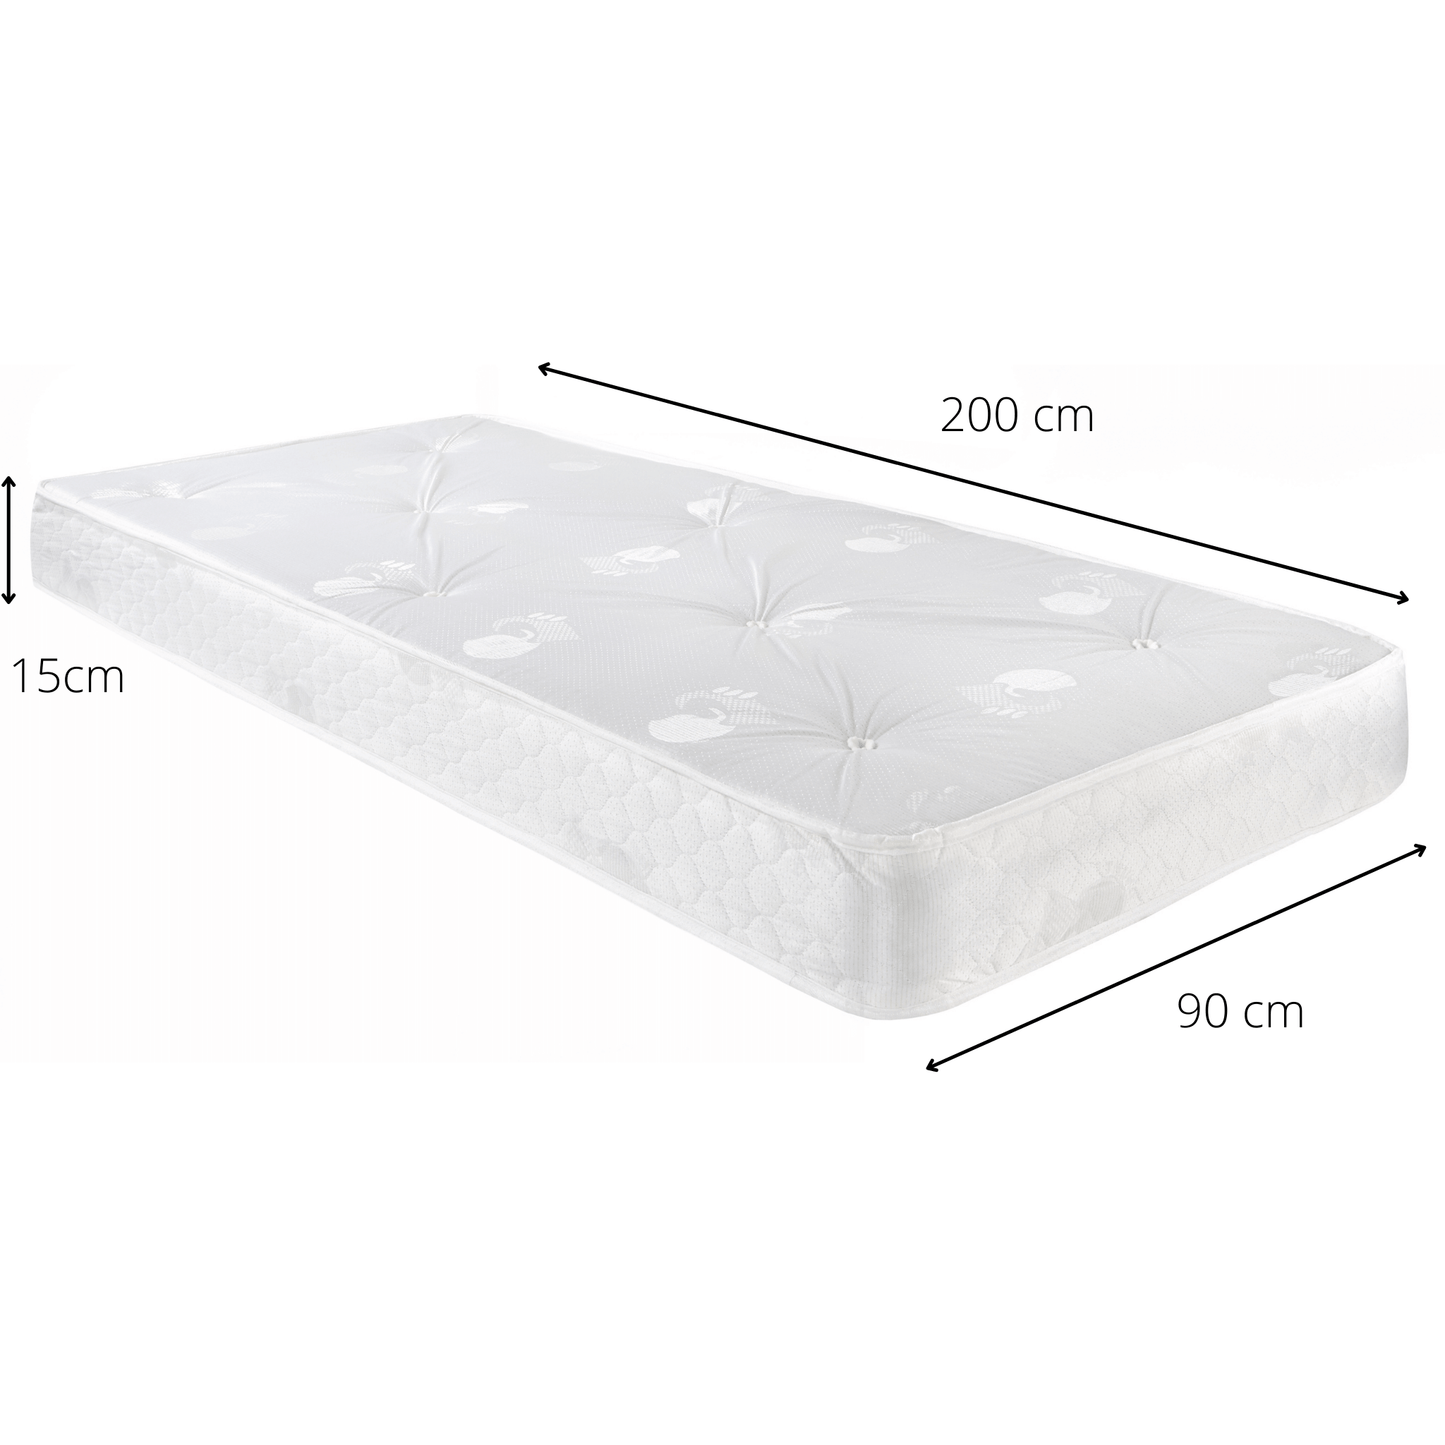 superior sprung single continental mattress dimensions